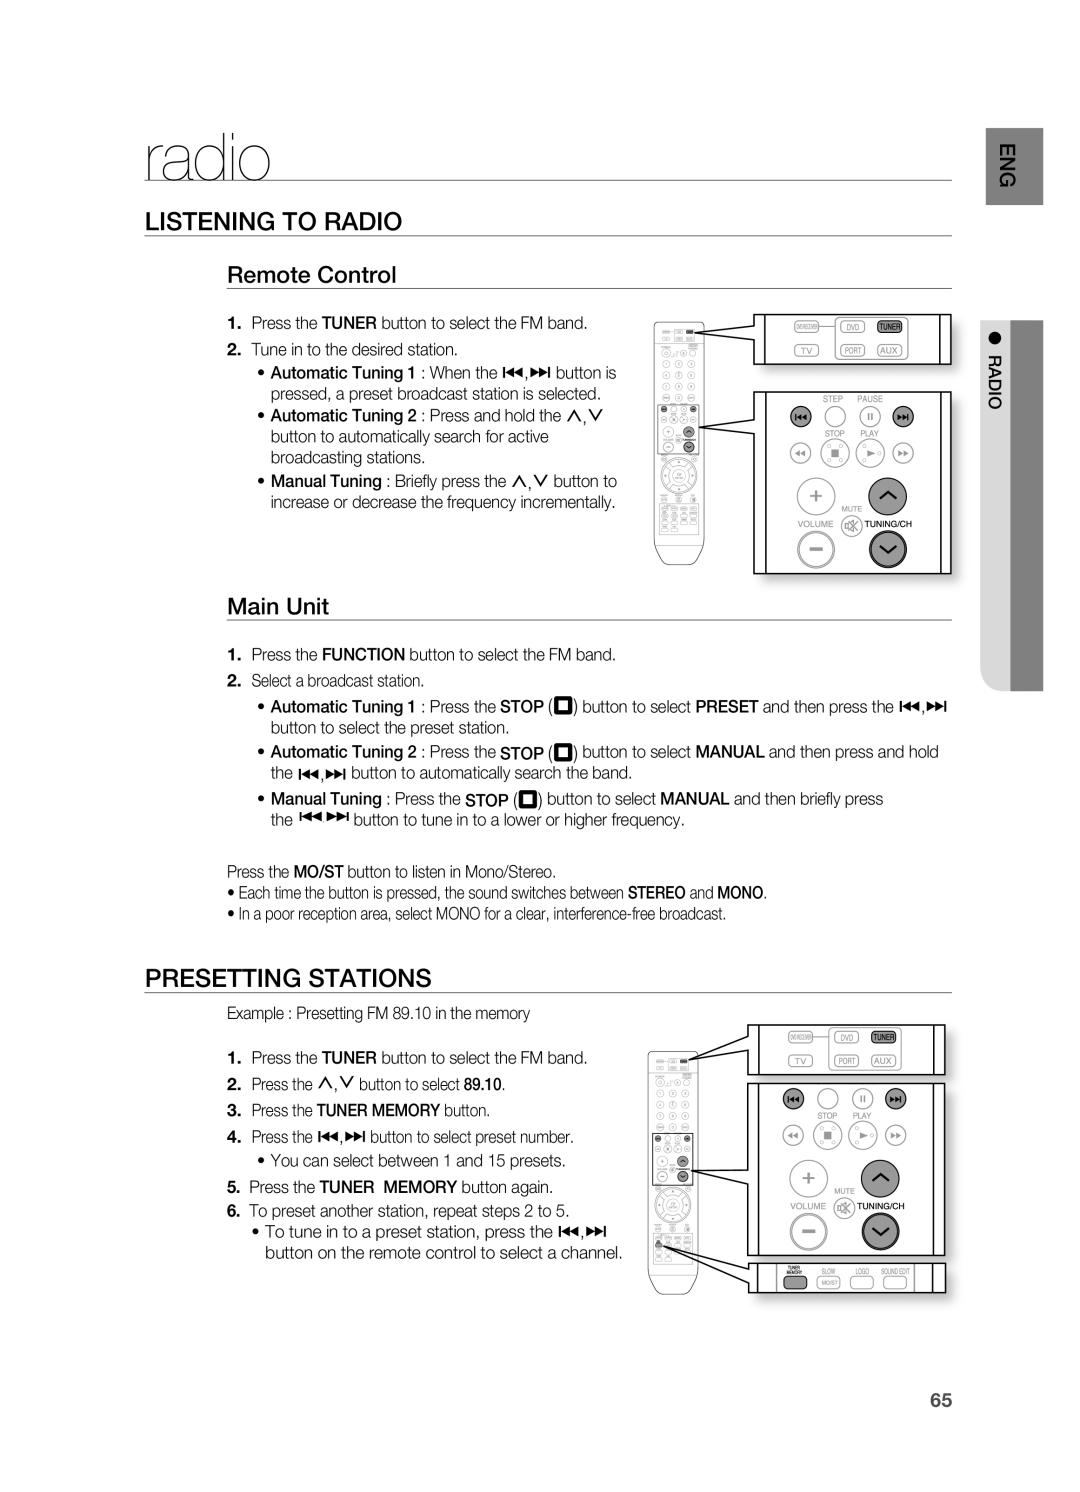 Samsung HT-Z510 manual radio, Listening To Radio, Presetting Stations 